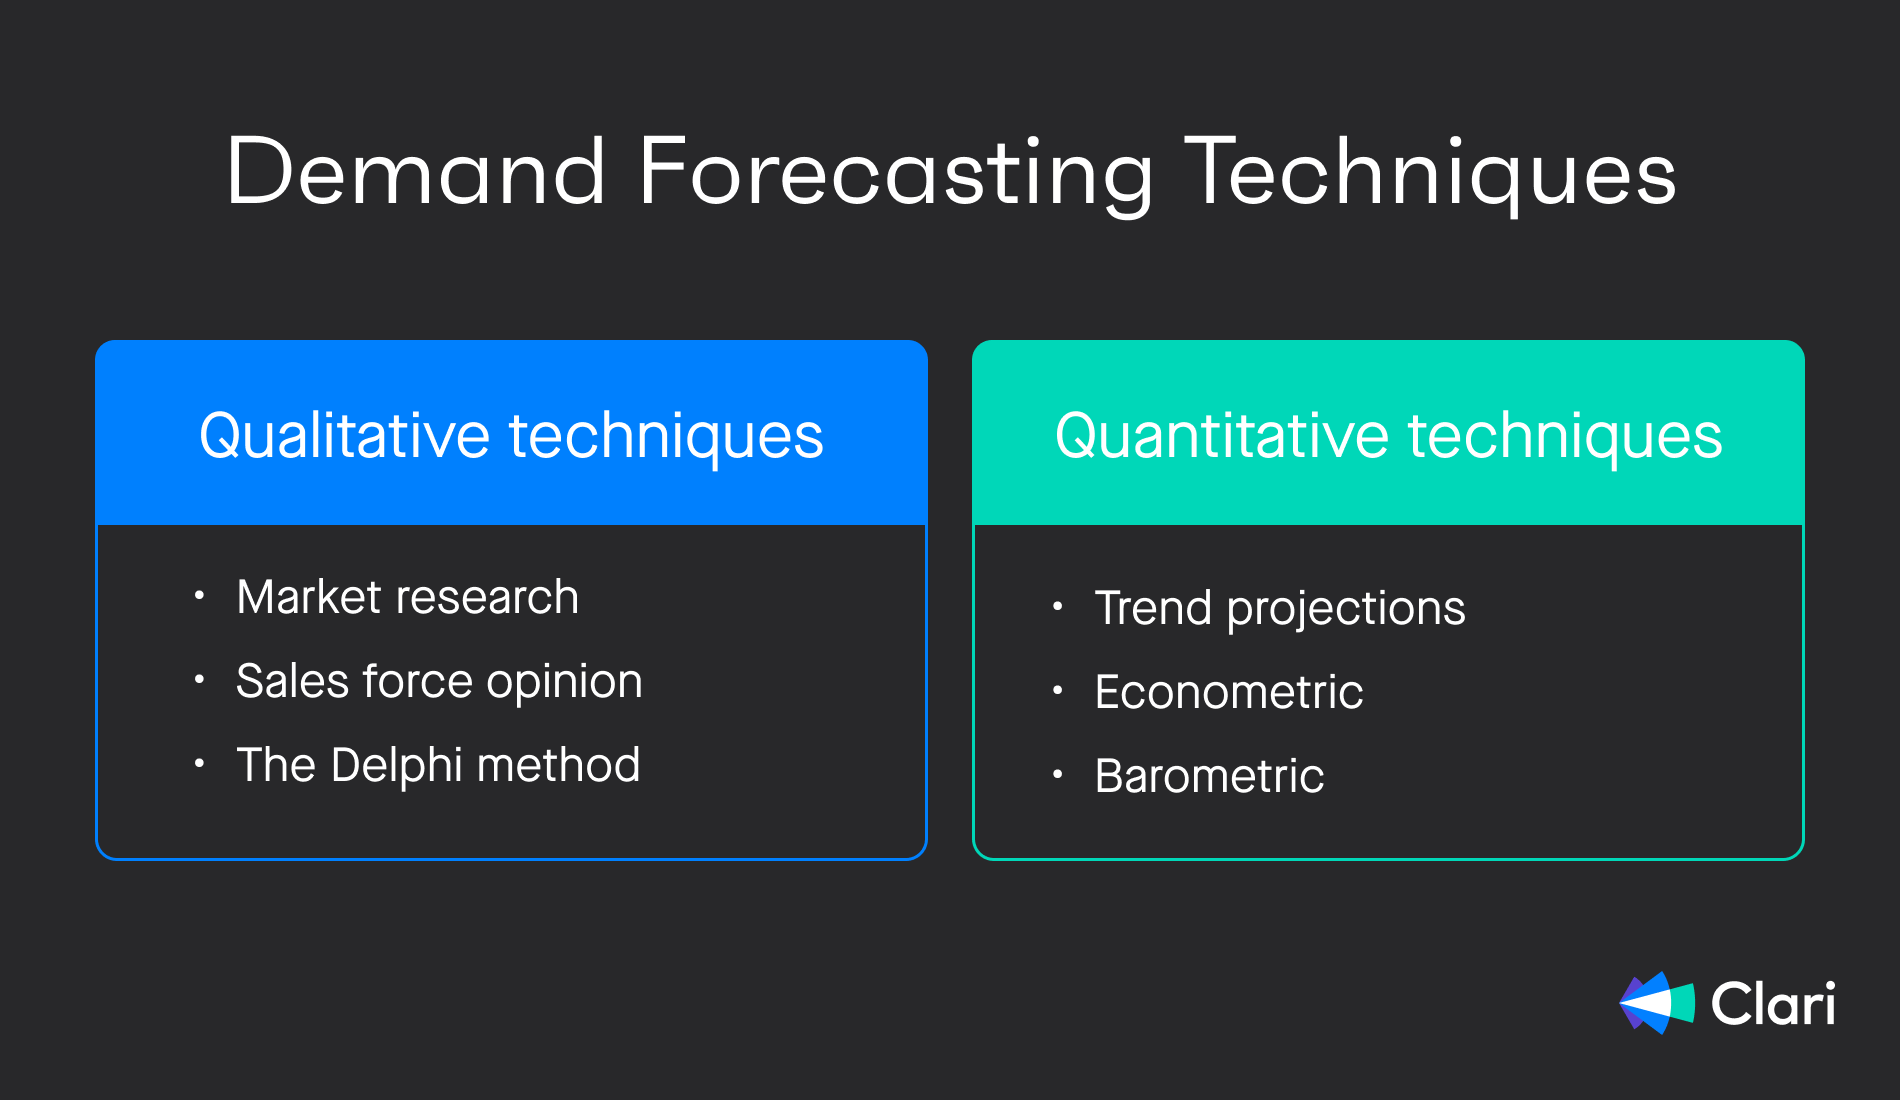 Six demand forecasting techniques